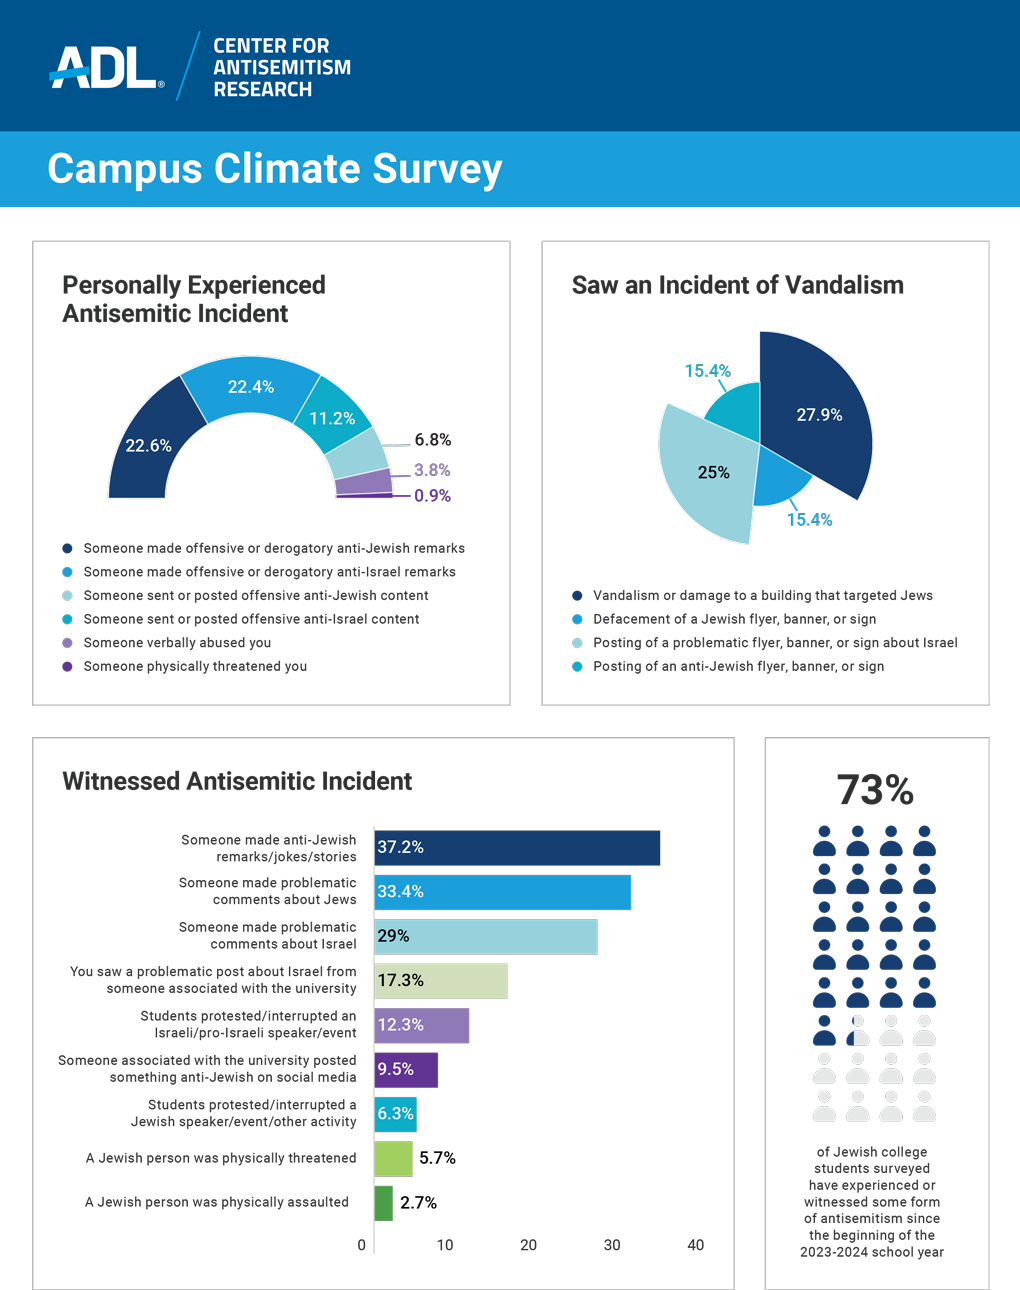 Campus Climate Survey infographic